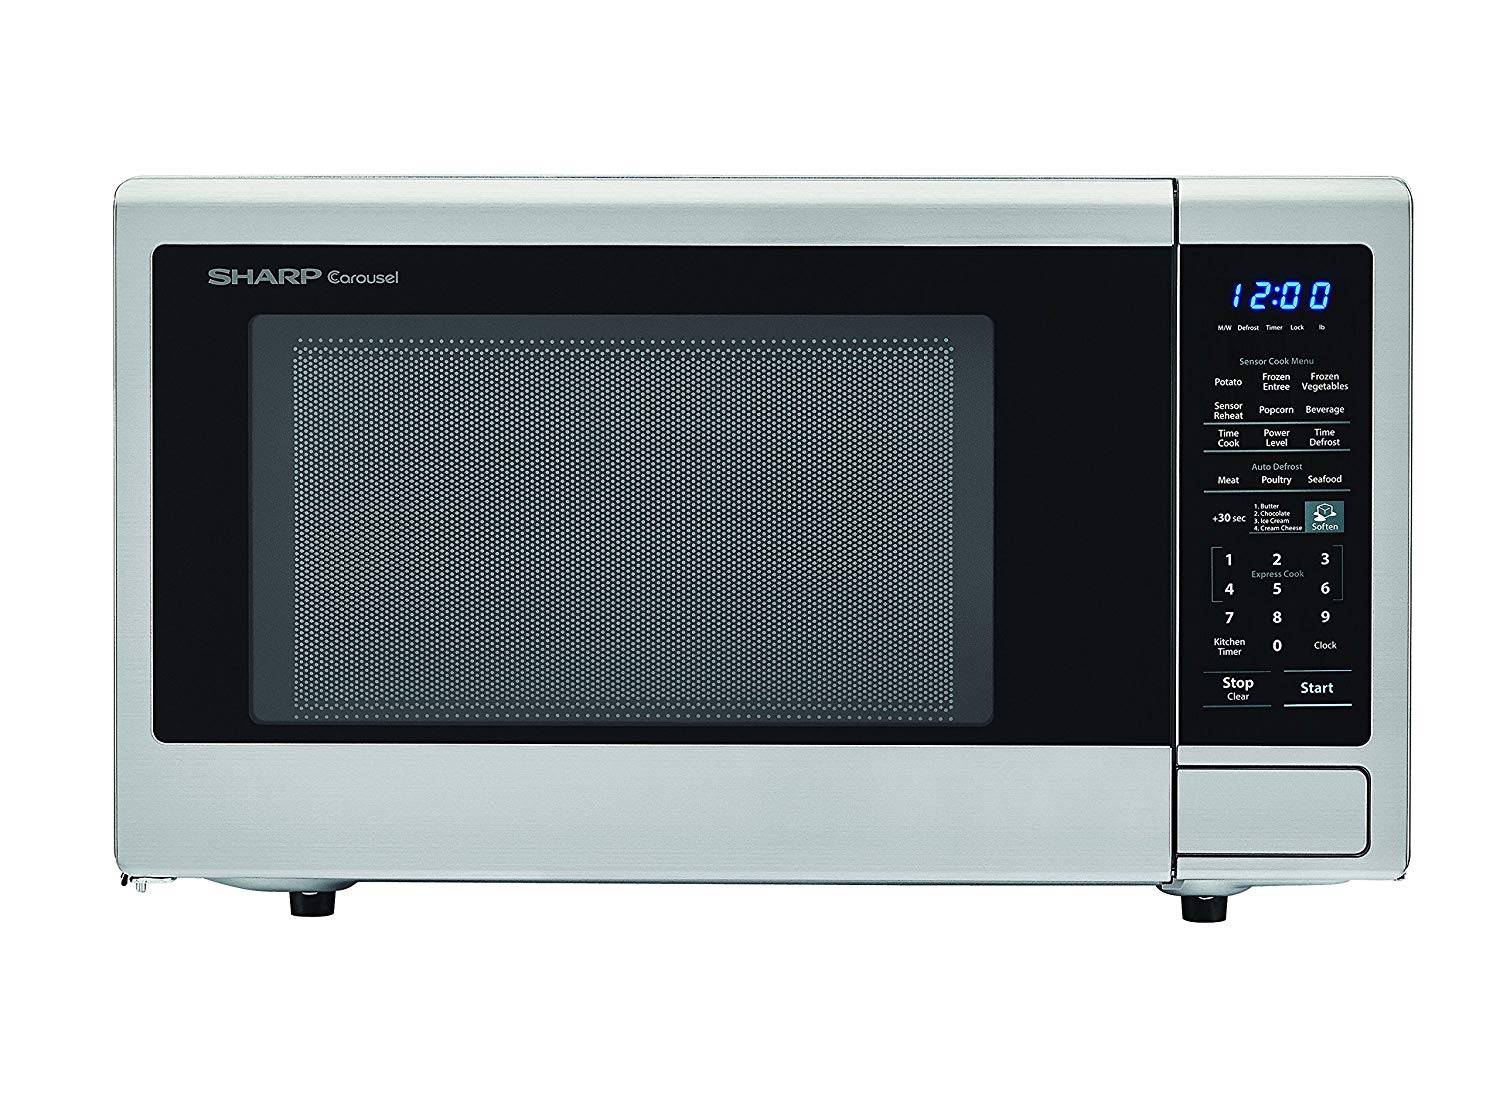 SHARP ZSMC1442CS Carousel 1.4 Cu. Ft. 1000W Countertop Microwave Oven